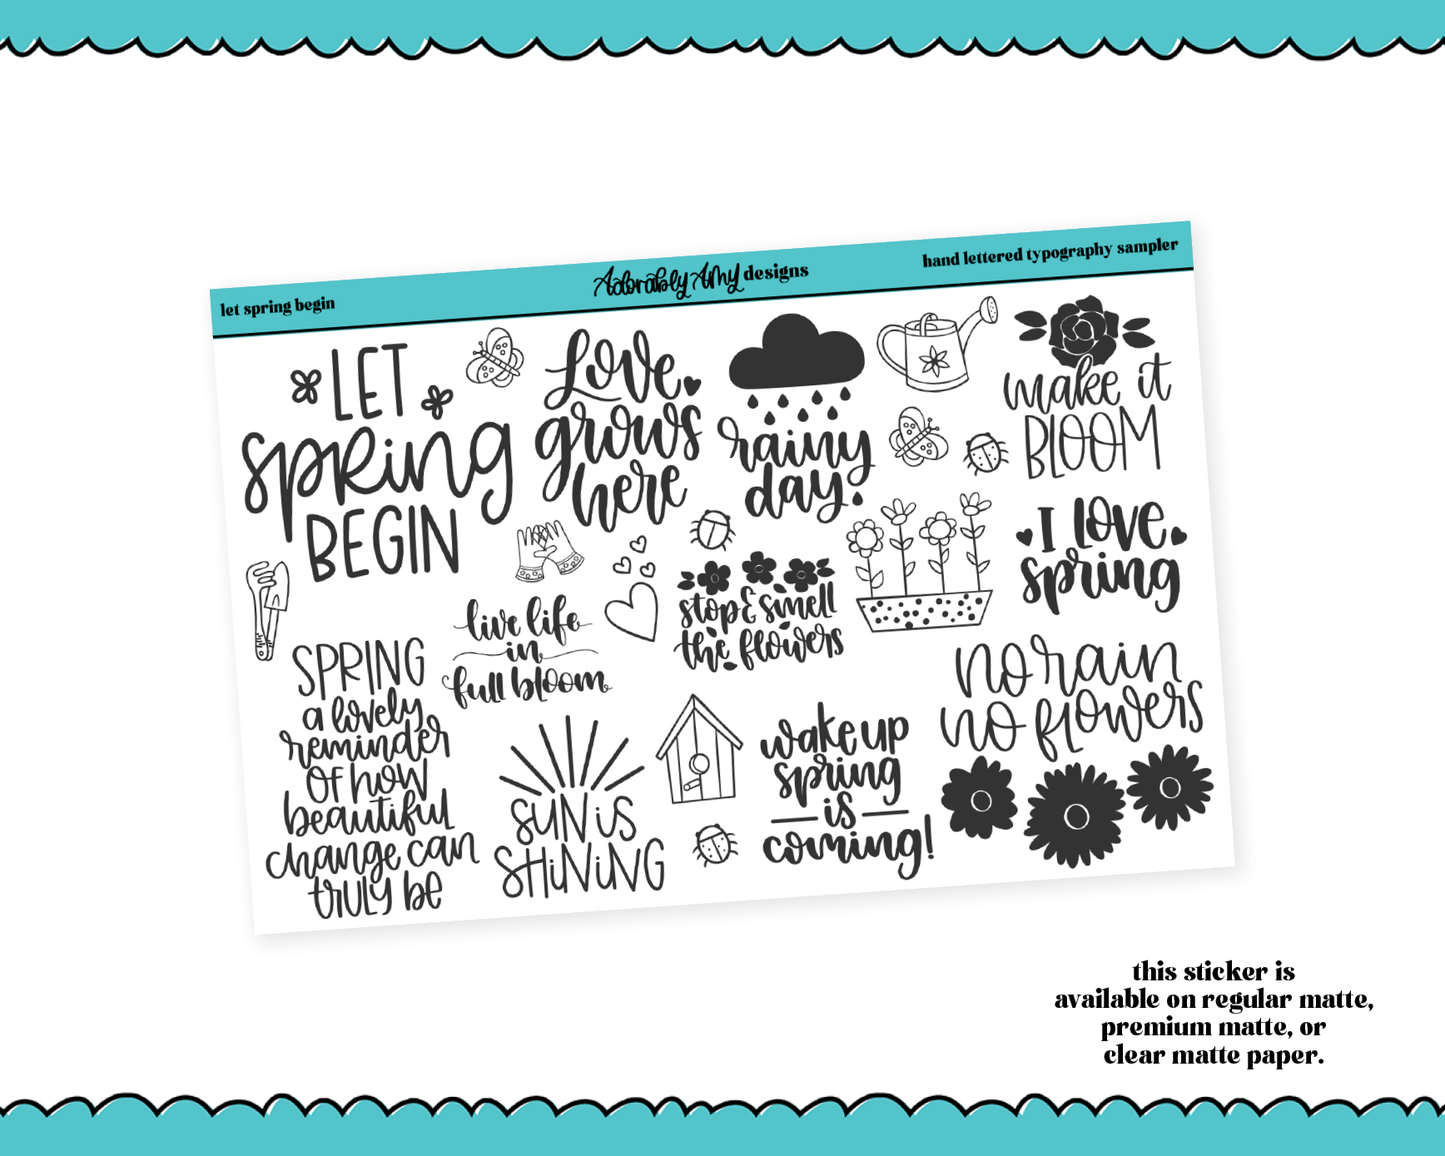 Hand Lettered Let Spring Begin Typography Sampler Planner Stickers for any Planner or Insert